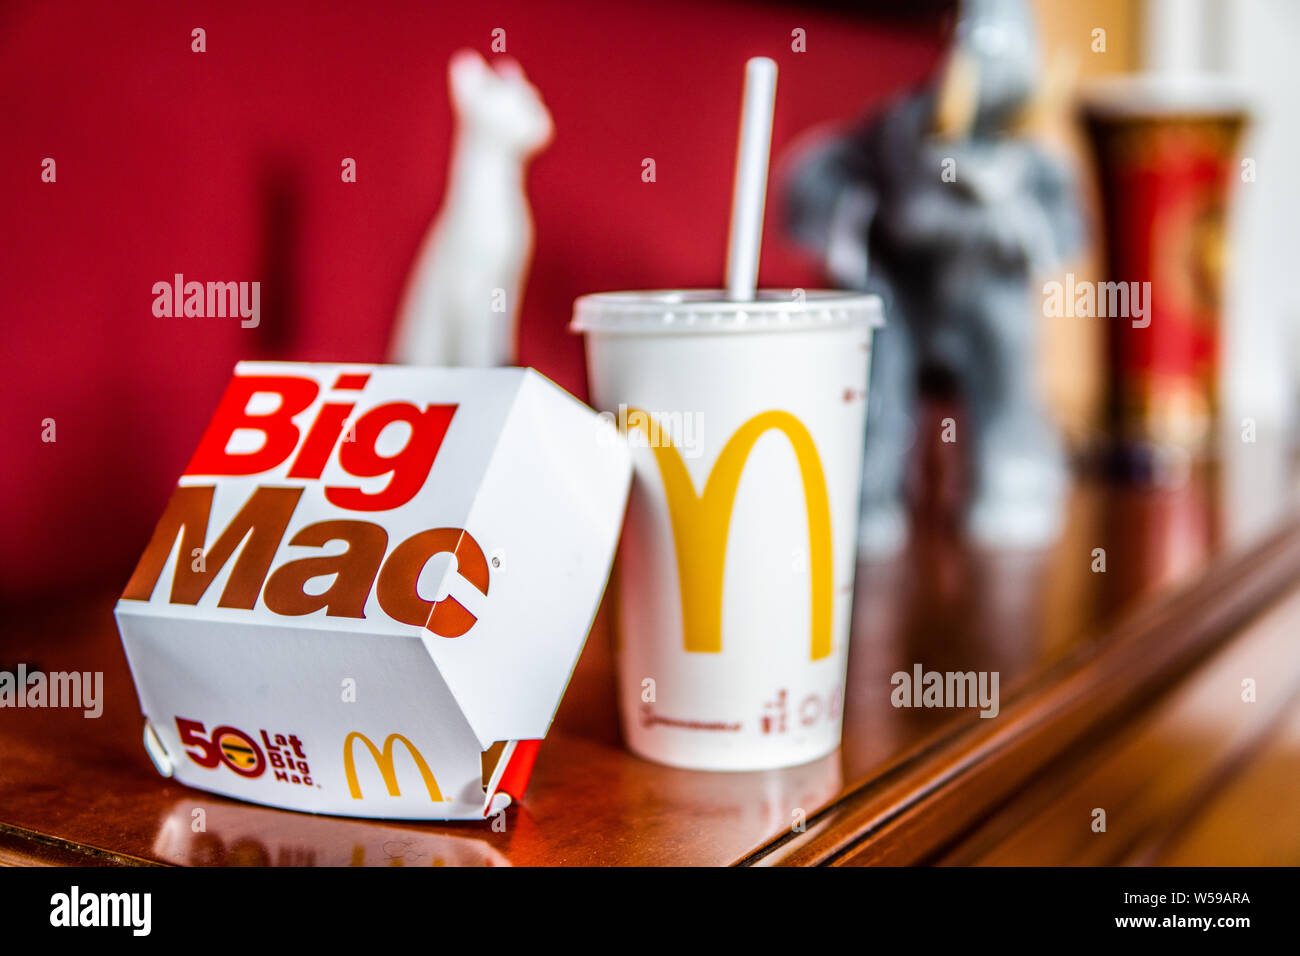 https://c8.alamy.com/comp/W59ARA/warsaw-poland-july-2018-mcdonalds-big-mac-100-pure-beef-sandwiched-with-refreshing-coca-cola-coke-big-yellow-mcdonalds-m-sign-logo-on-cup-W59ARA.jpg